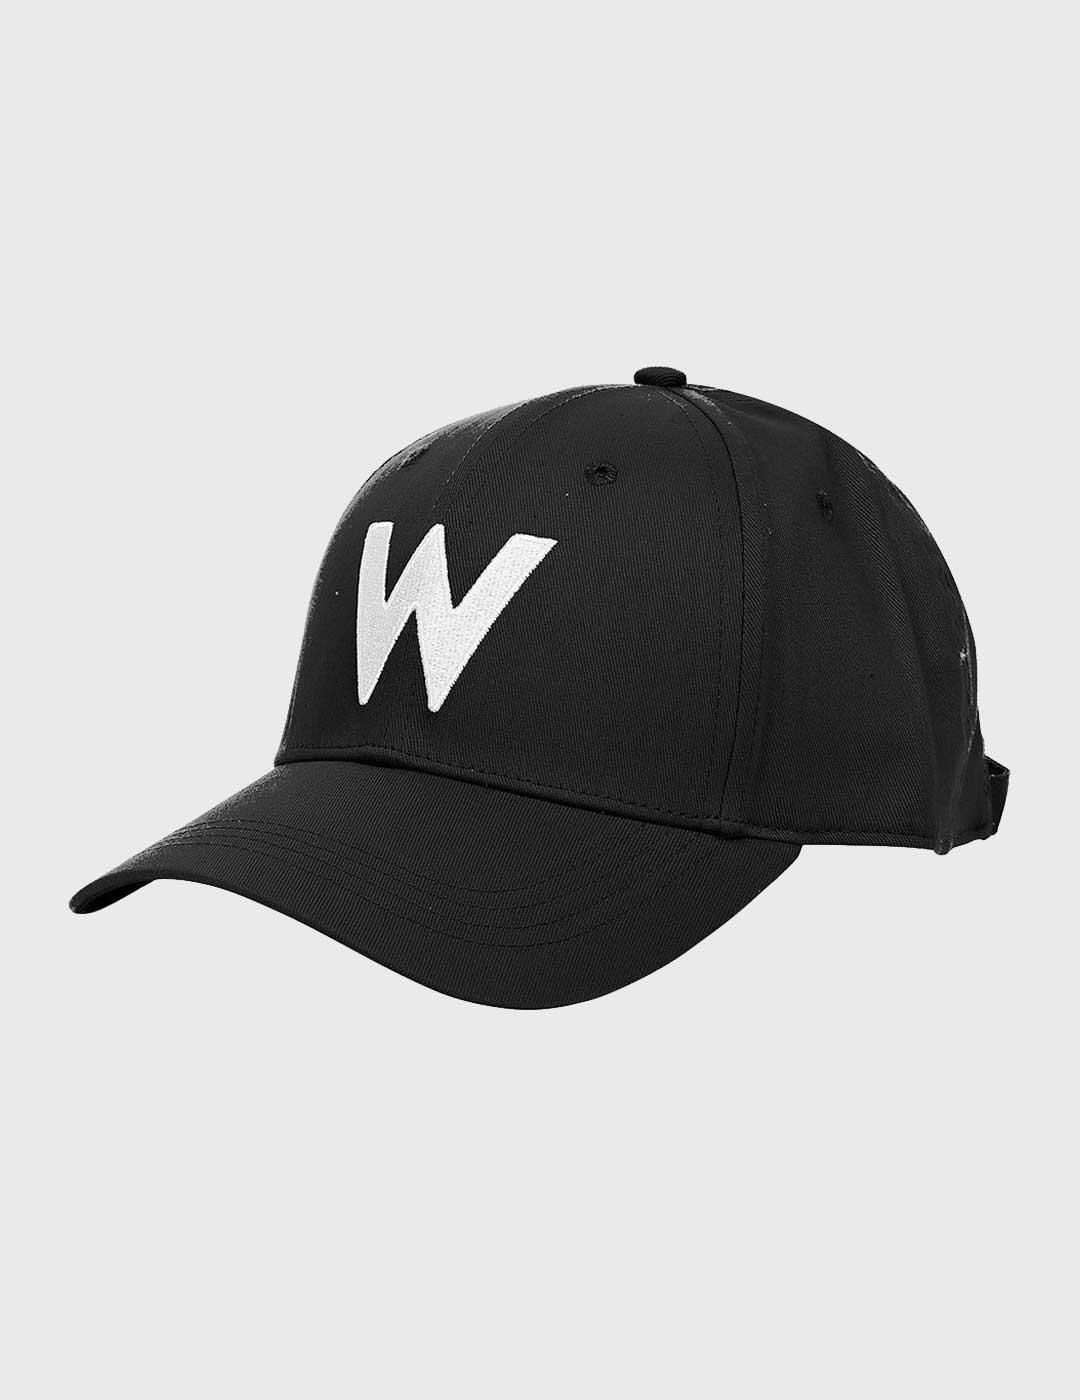 Gorra Wrangler W Logo negra para hombre y mujer